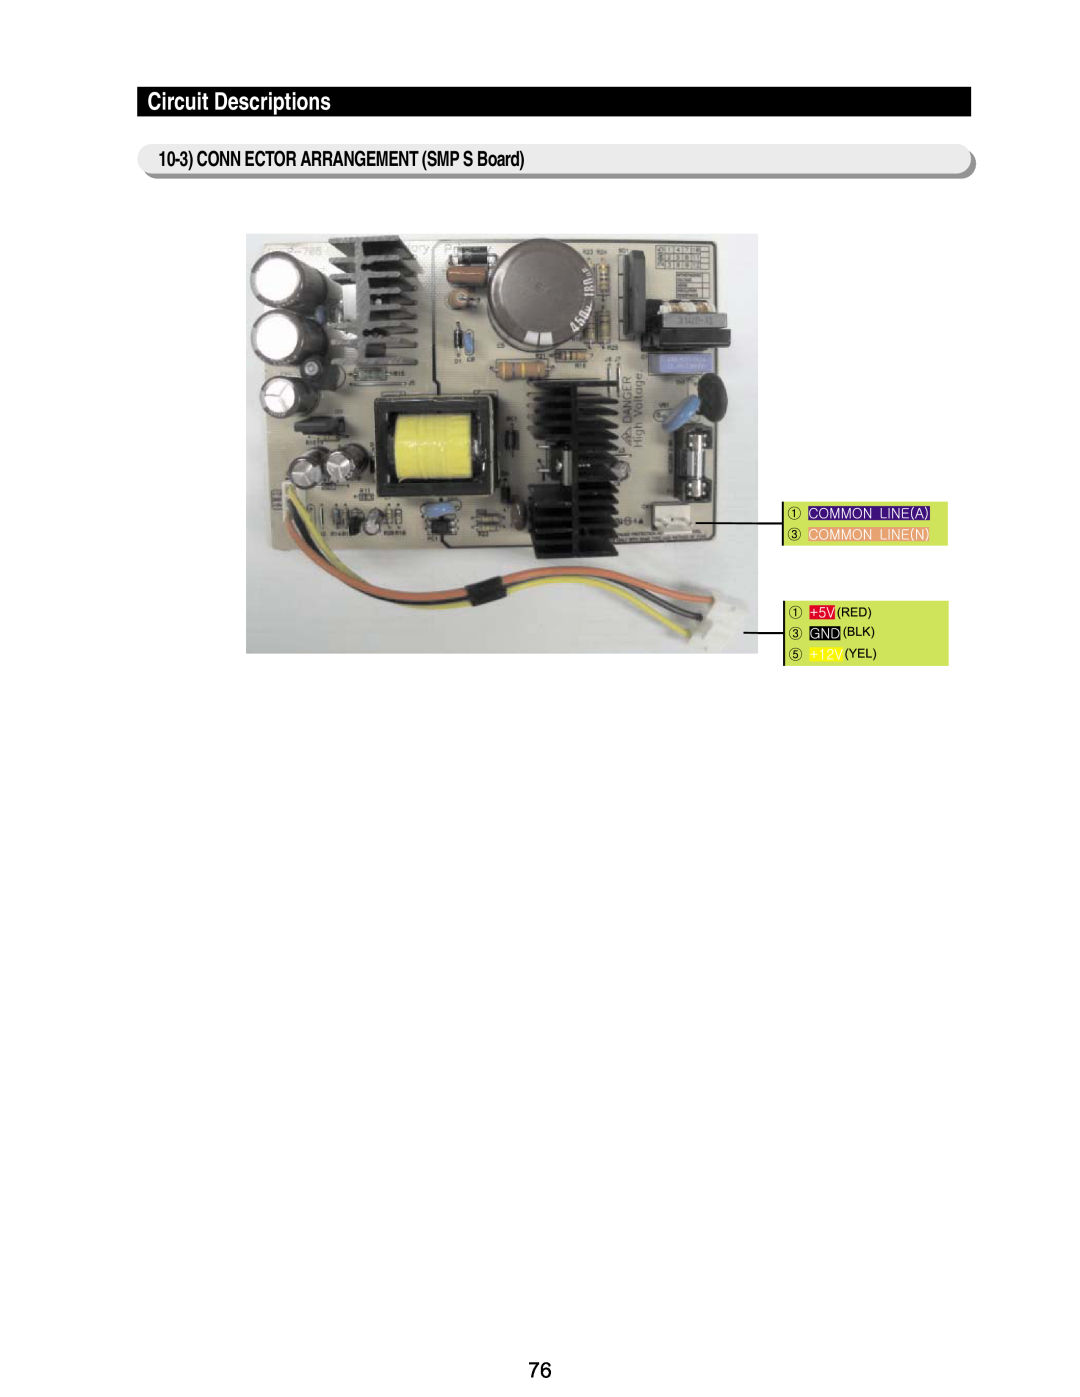 Samsung RM255BABB, RM255BASB manual Circuit Descriptions, CONN ECTOR ARRANGEMENT SMP S Board 